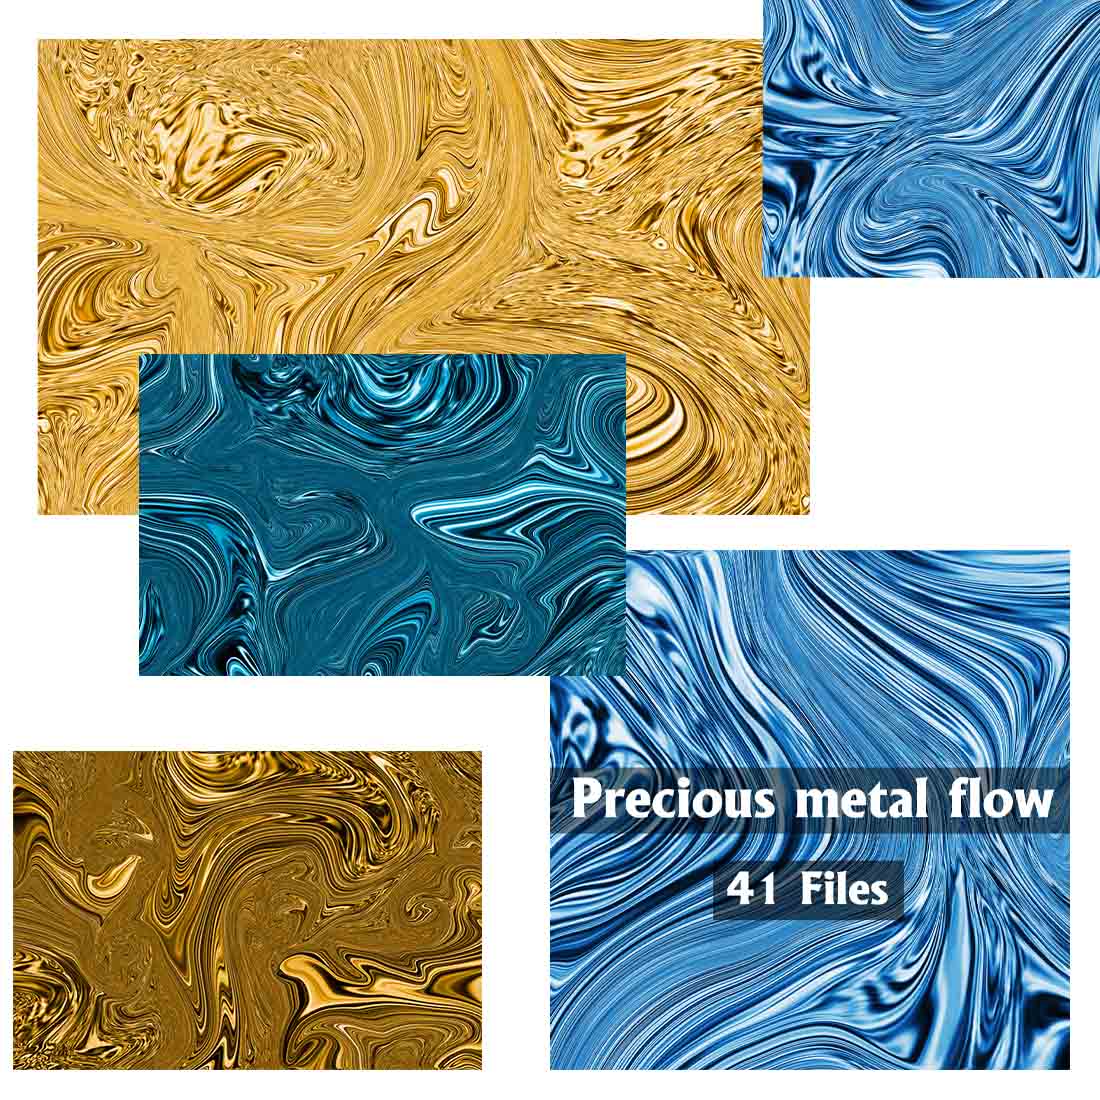 Precious metal flow preview image.